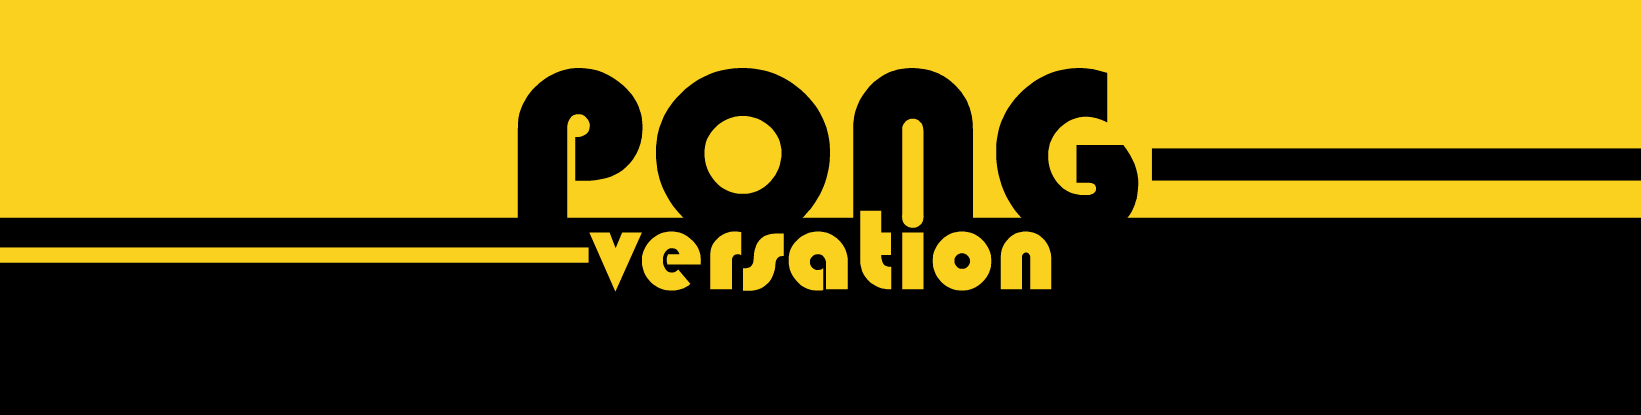 Pong-versation